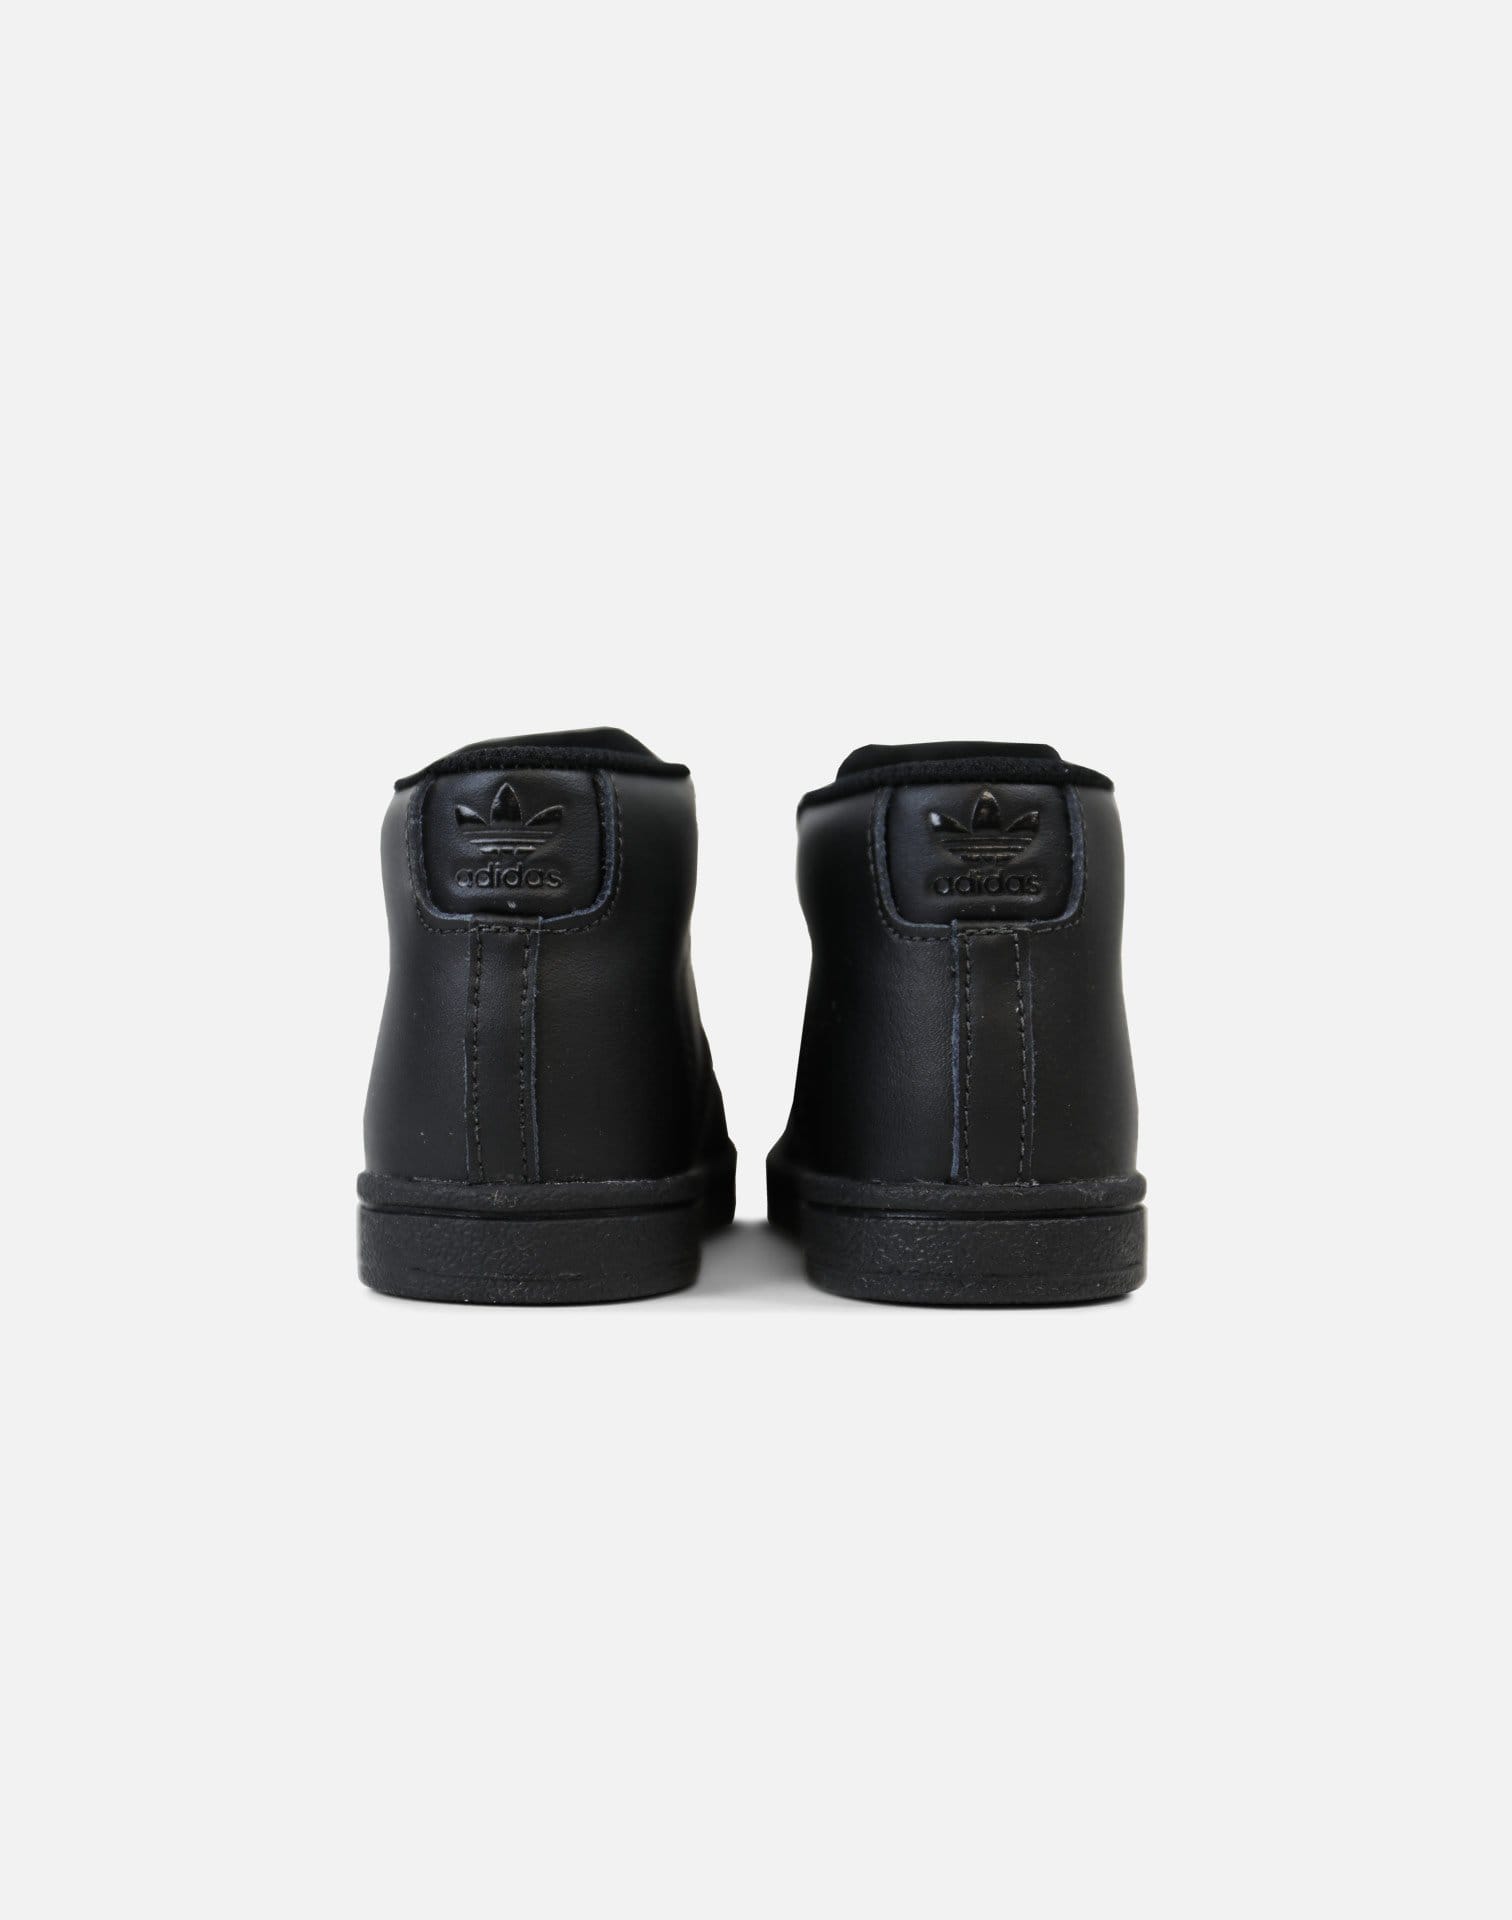 adidas Pro Model Infant (Black/Black-Black)